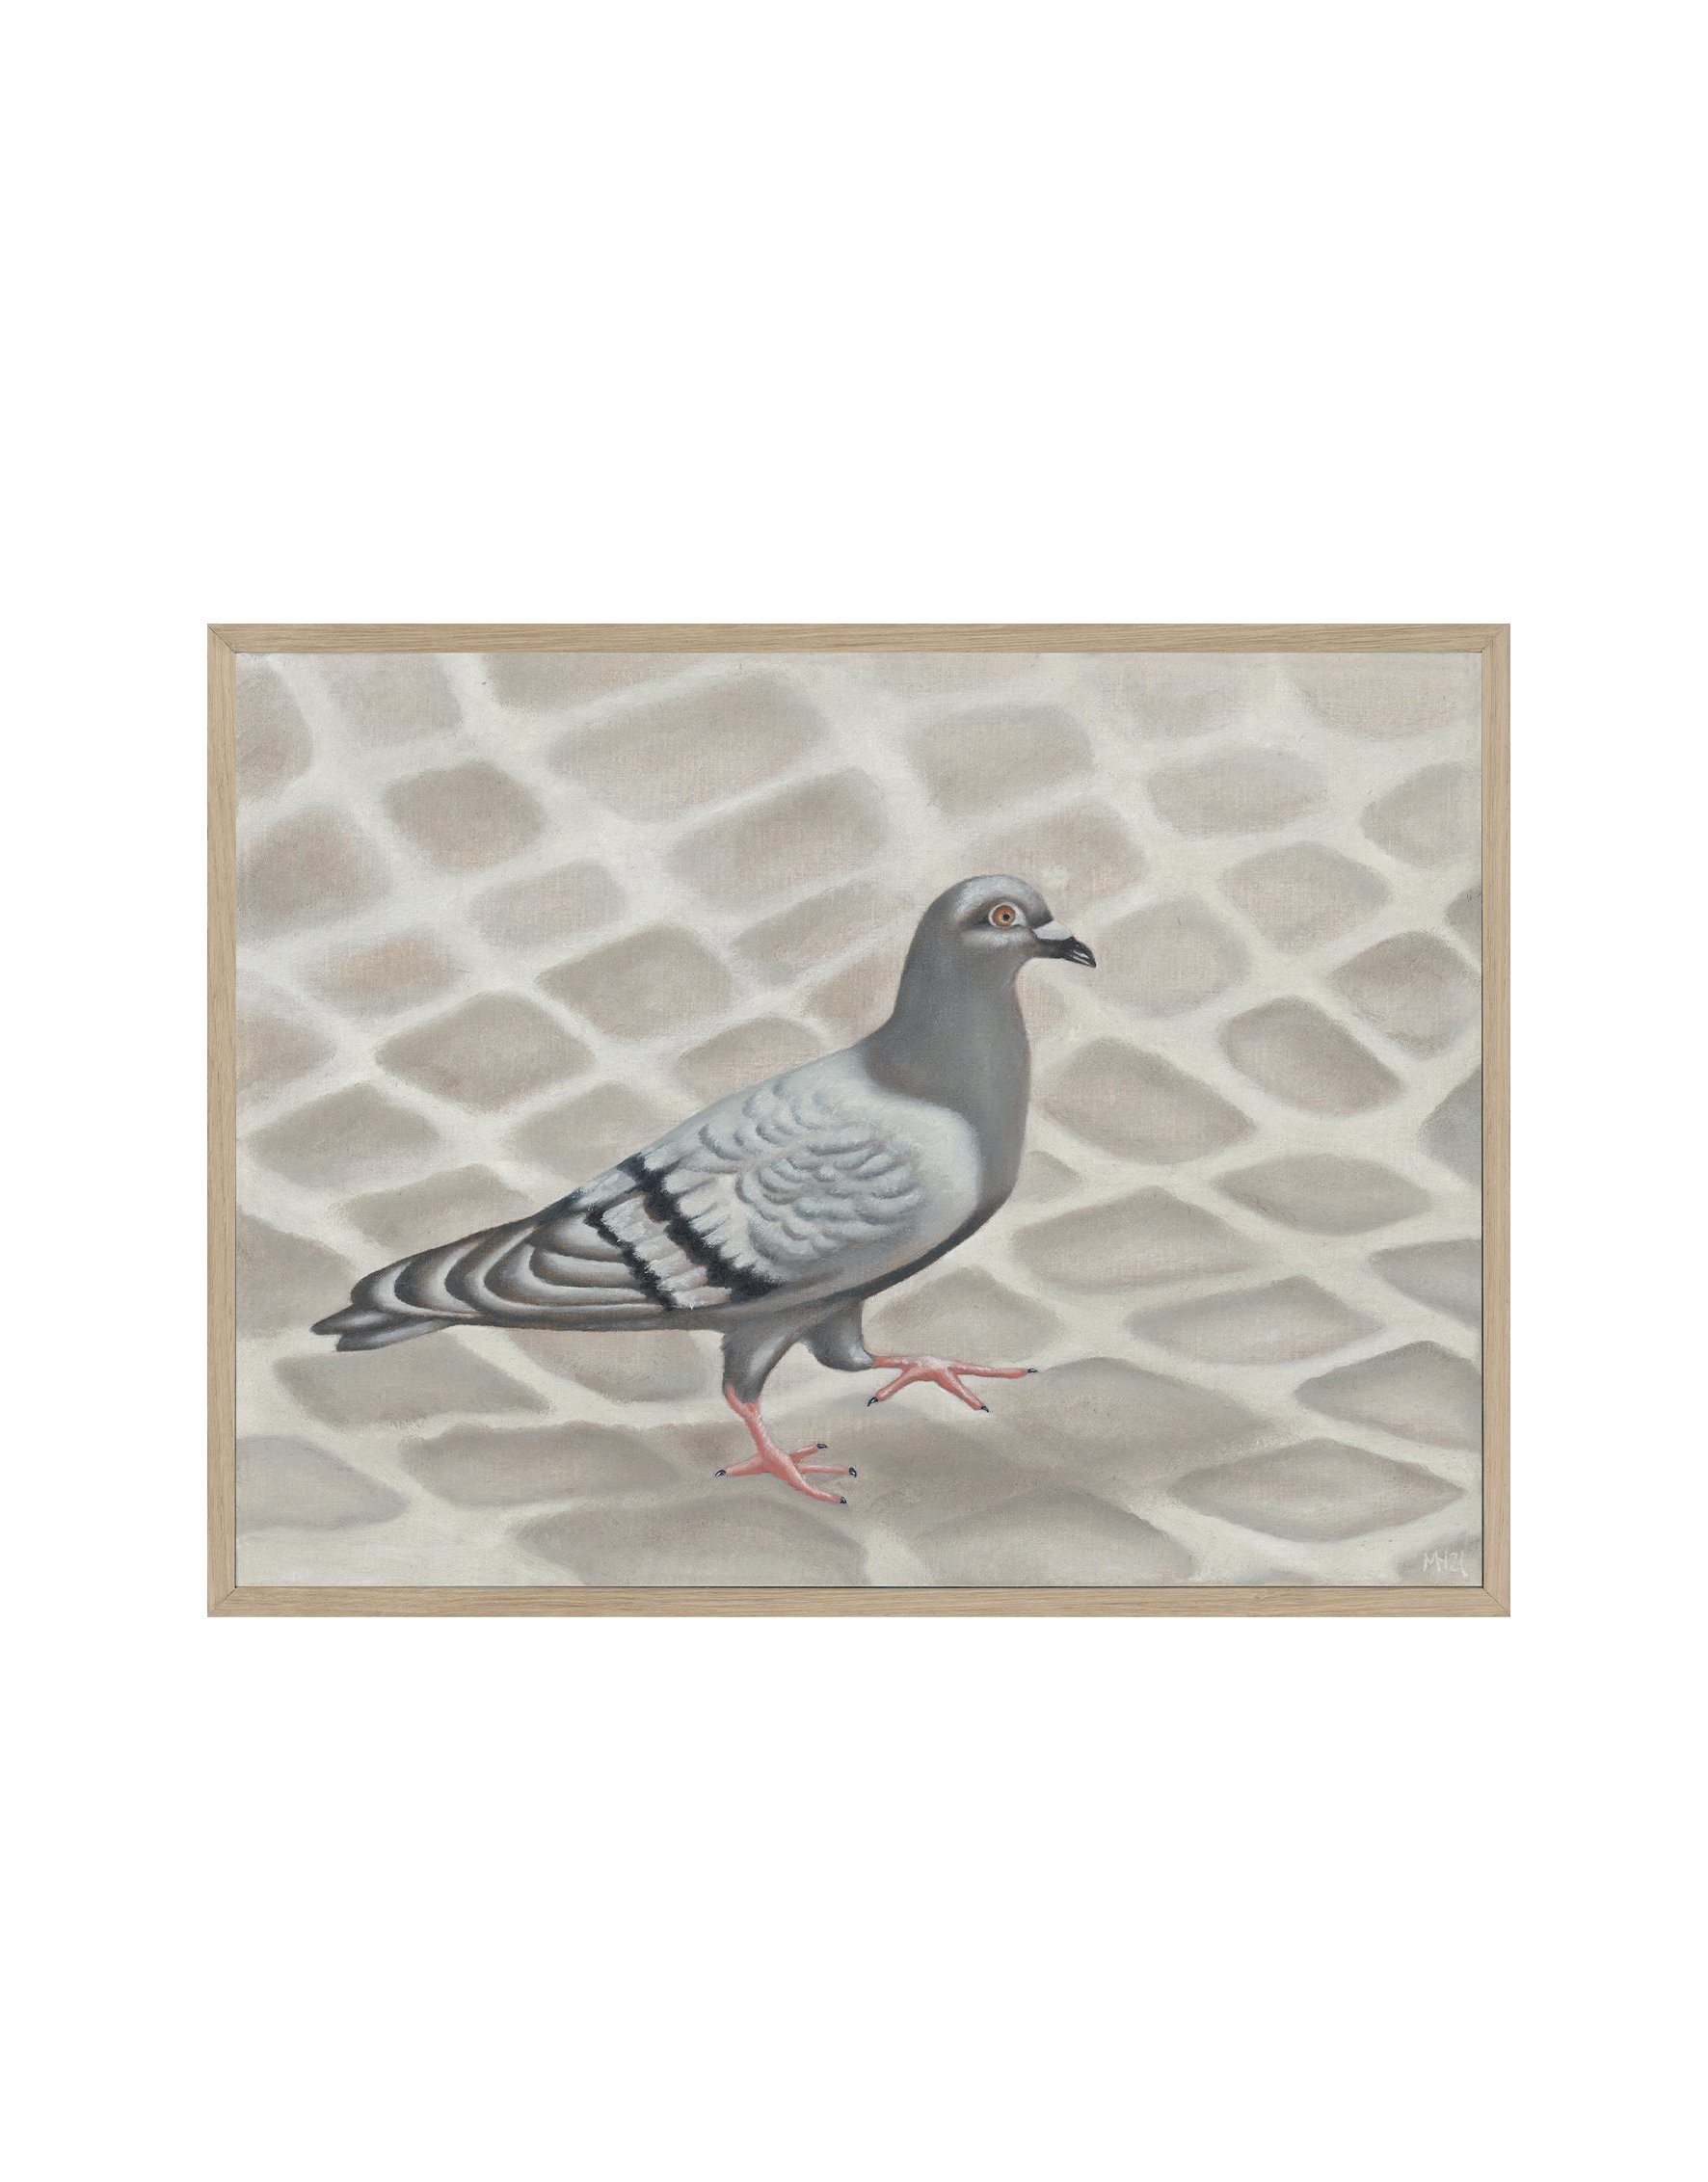 Title: Amsterdam Pigeon